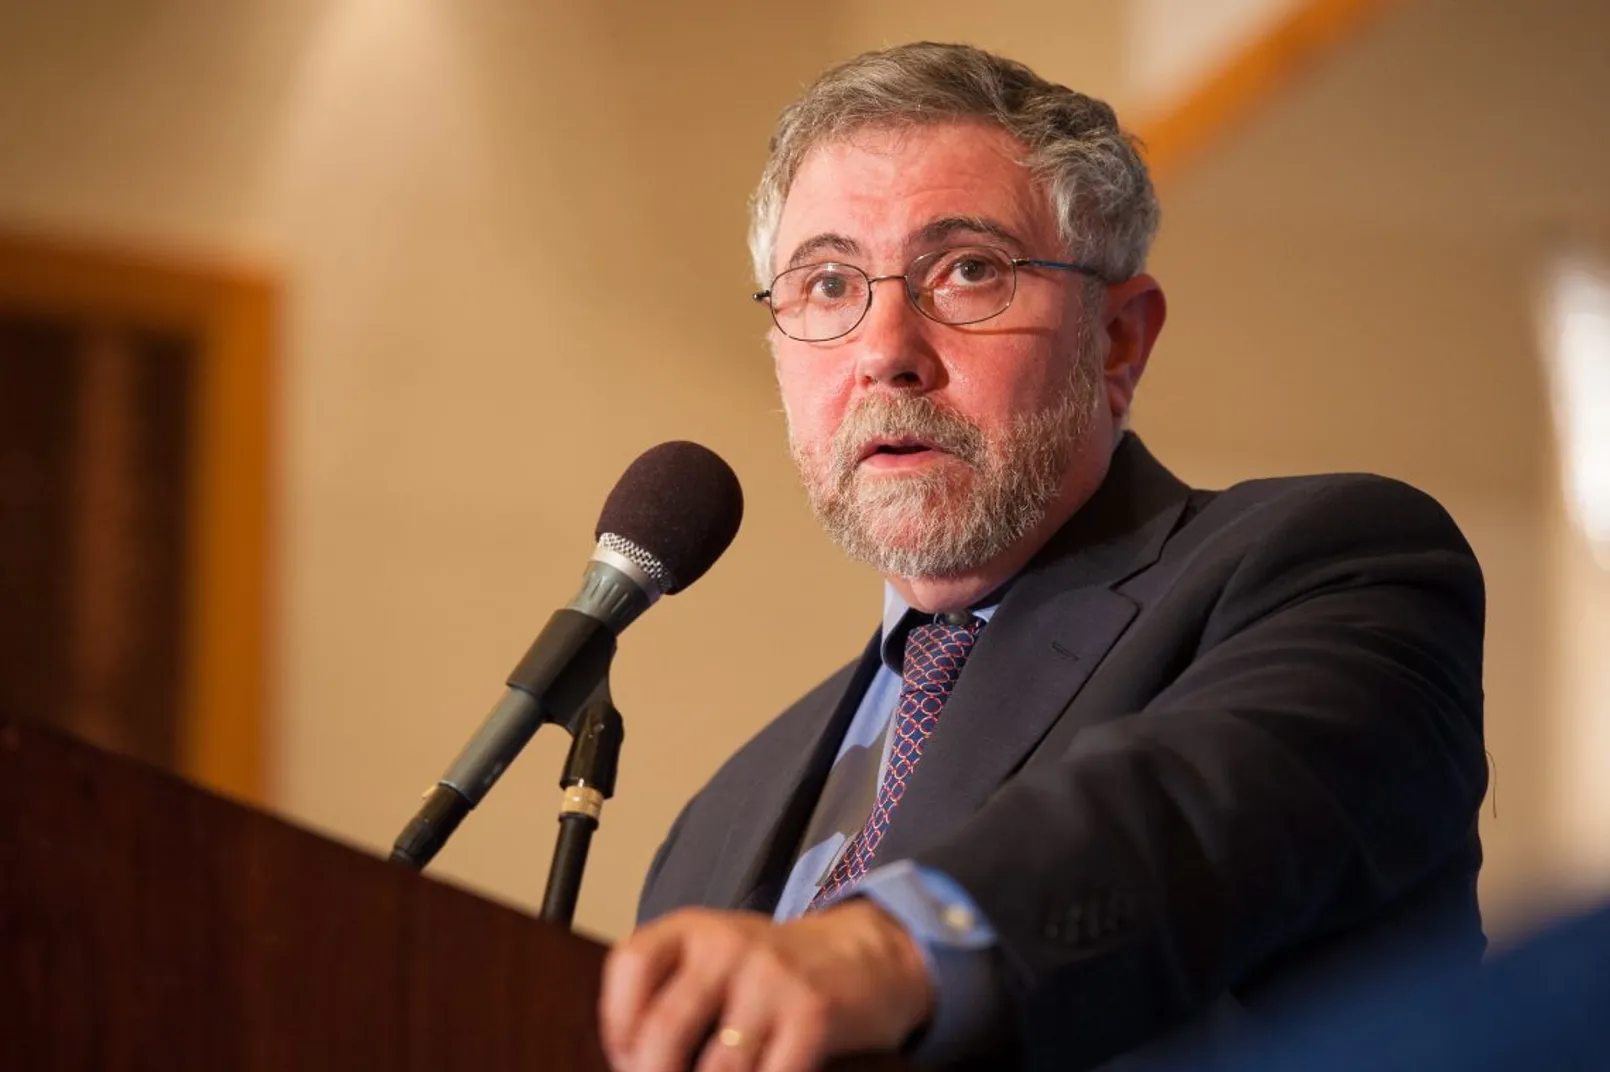 Paul Krugman.jpg